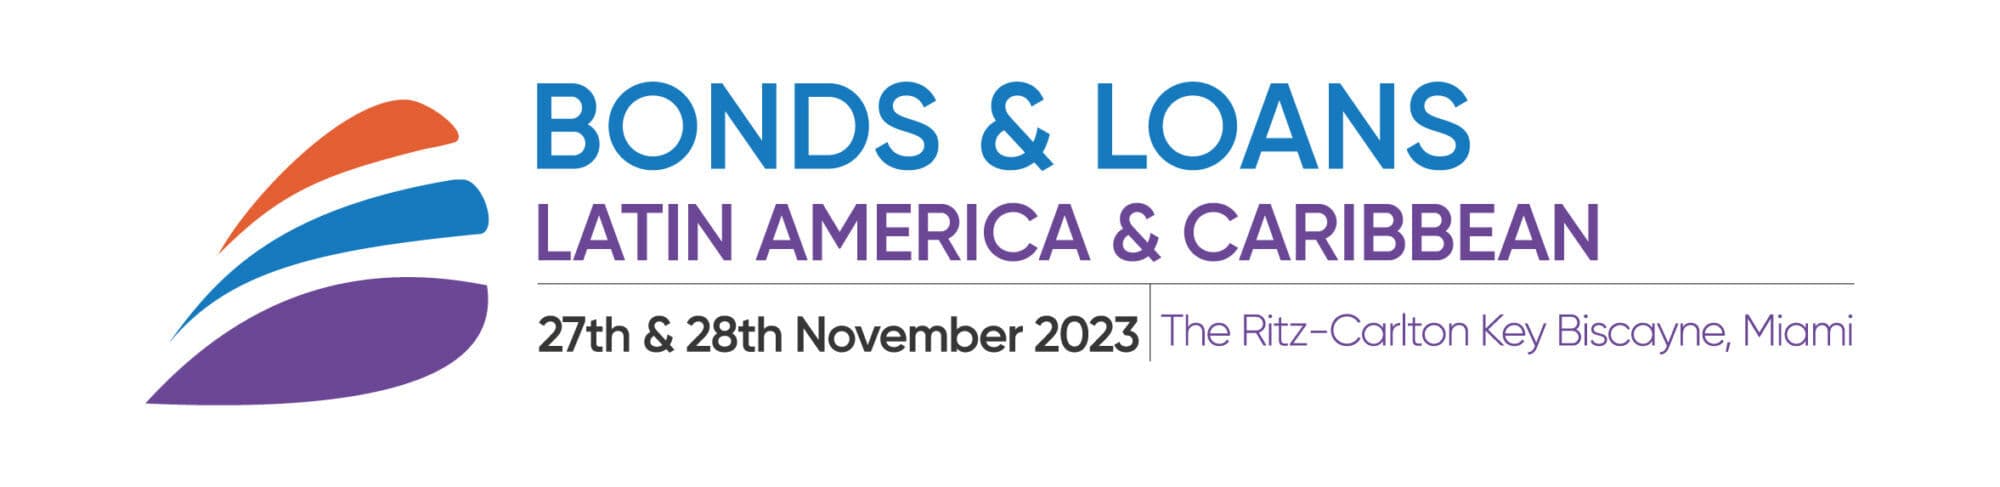 Bonds & Loans Latin America & Caribbean 2023